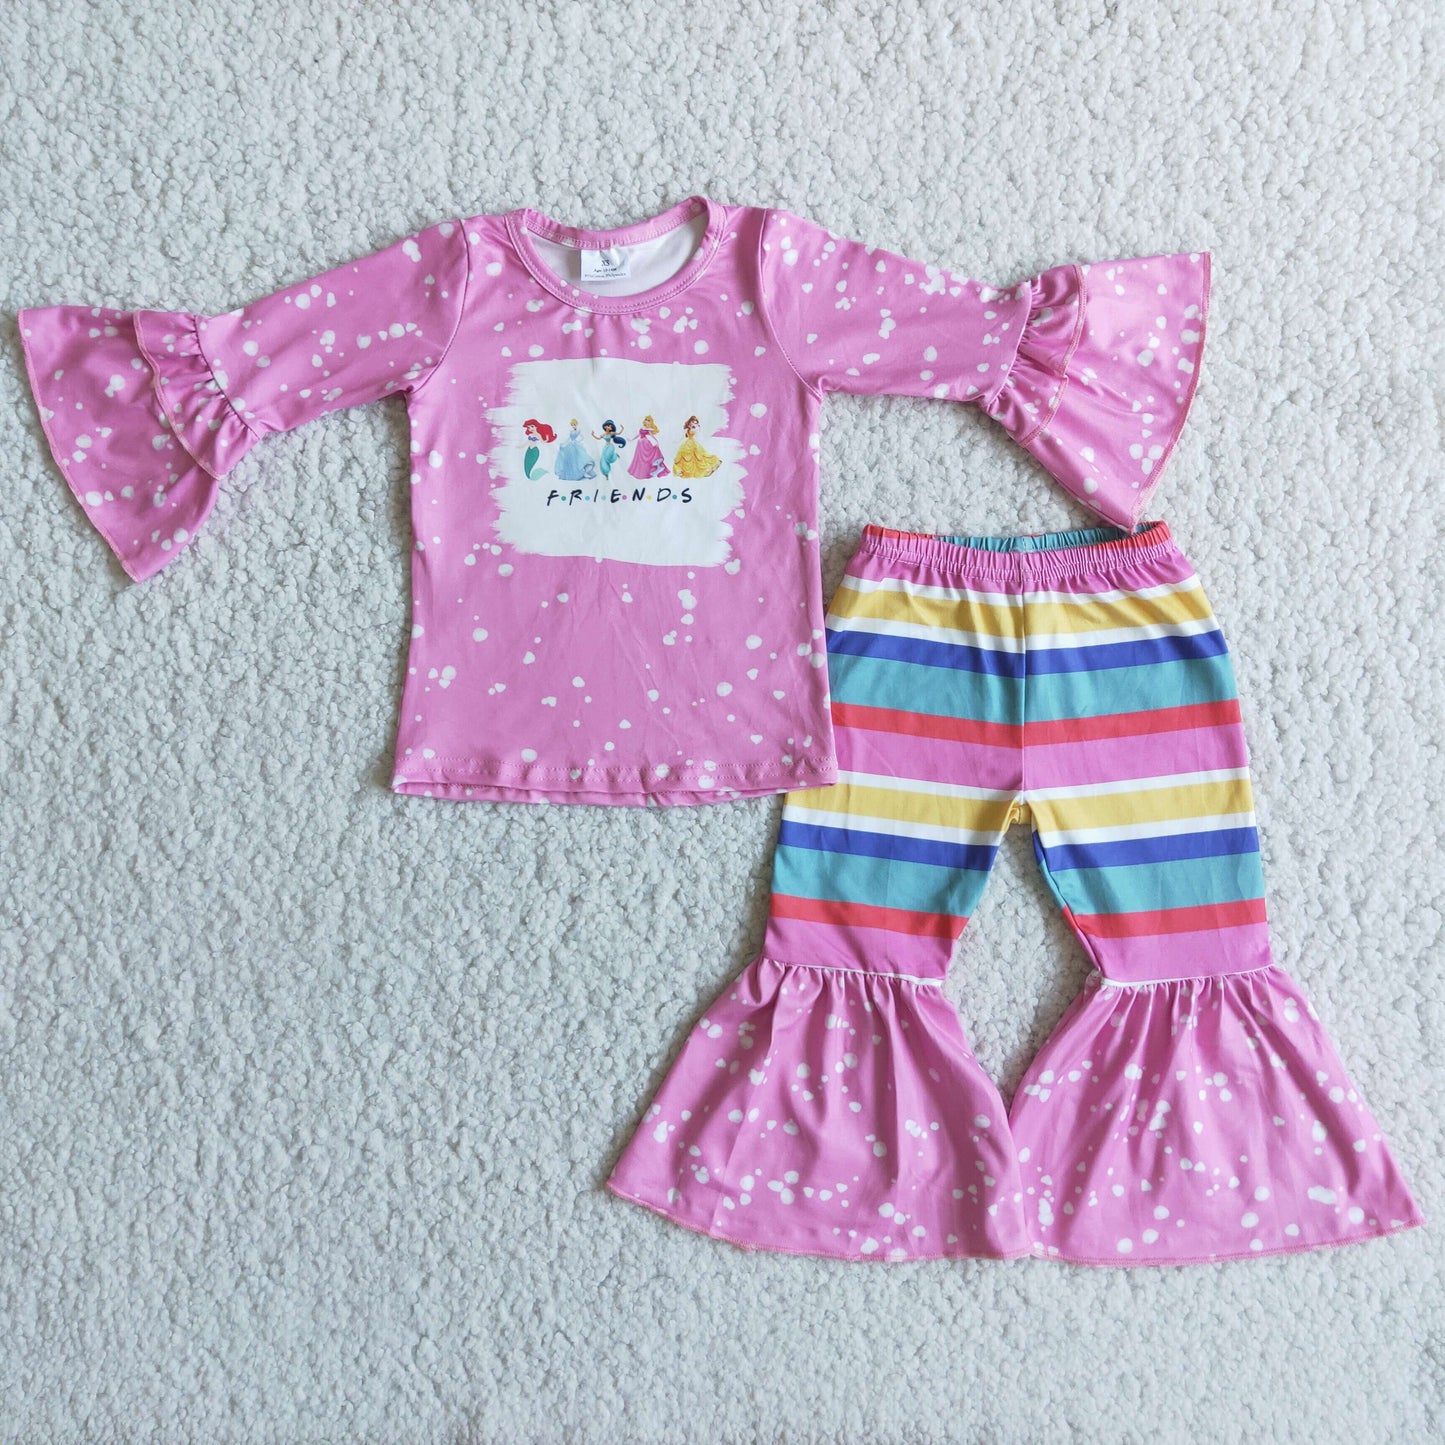 Baby girls fall clothing set